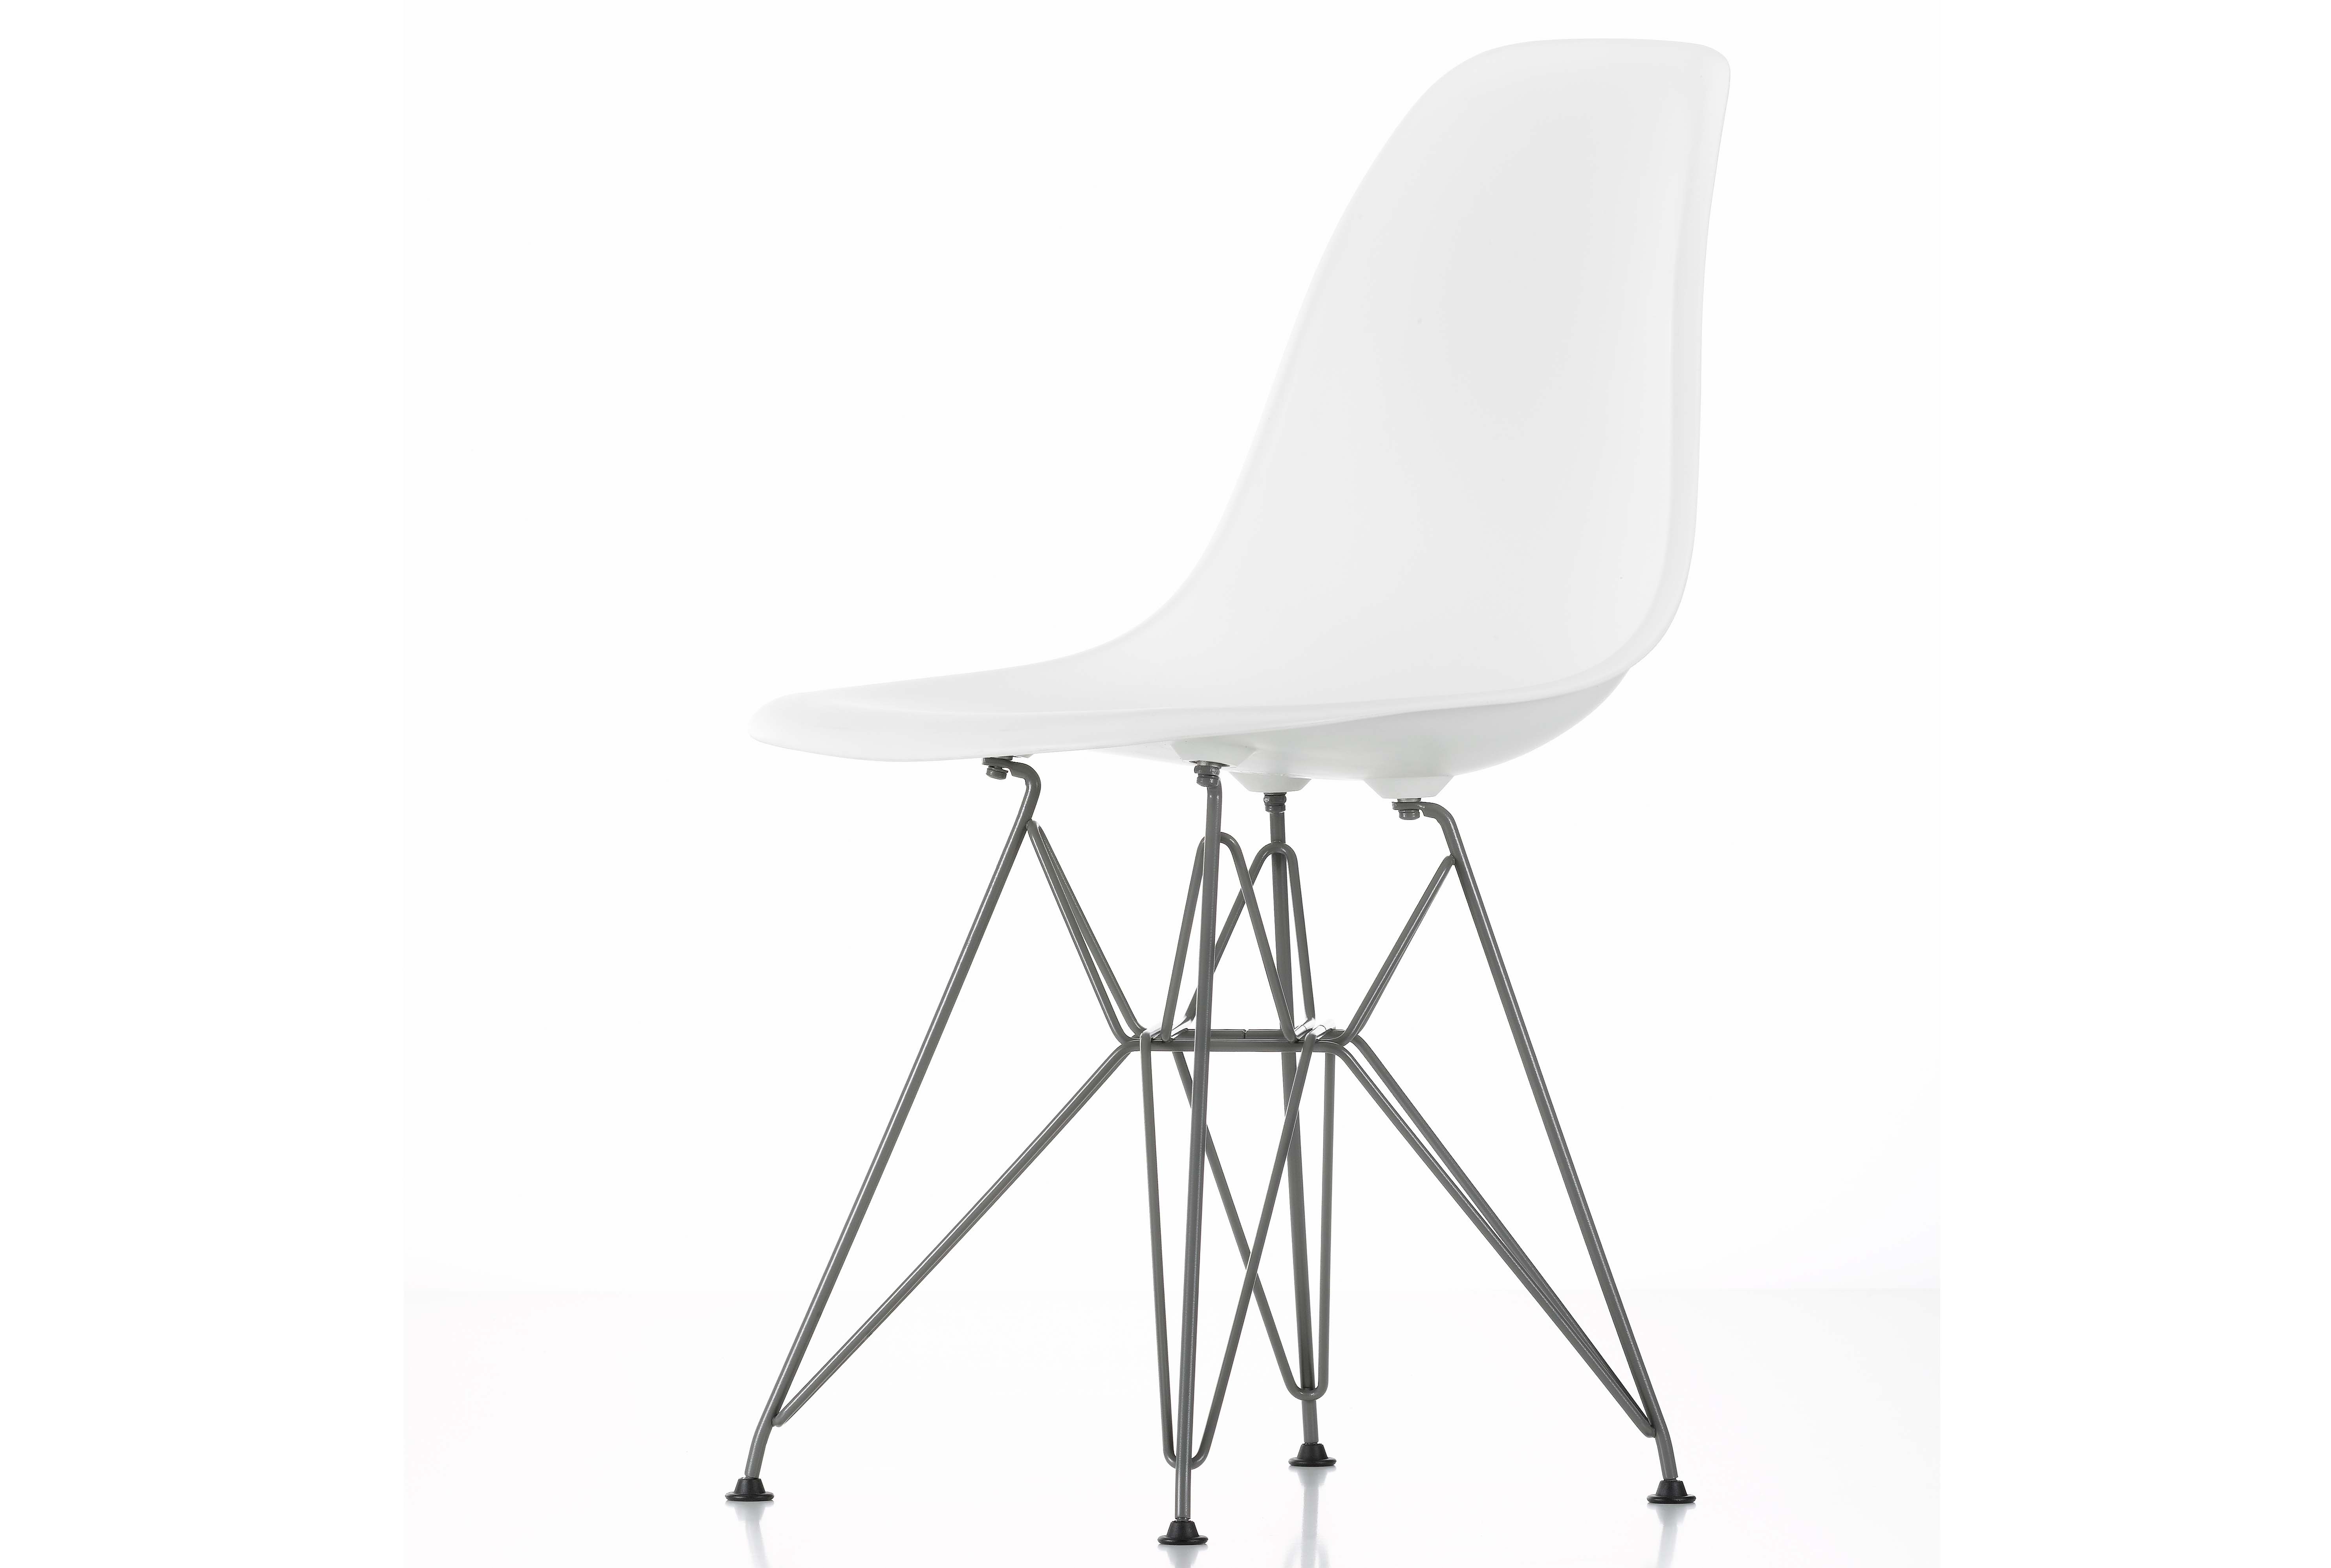 DSR Eames Plastic Chair fra Vitra, design: Charles & Ray Eames 